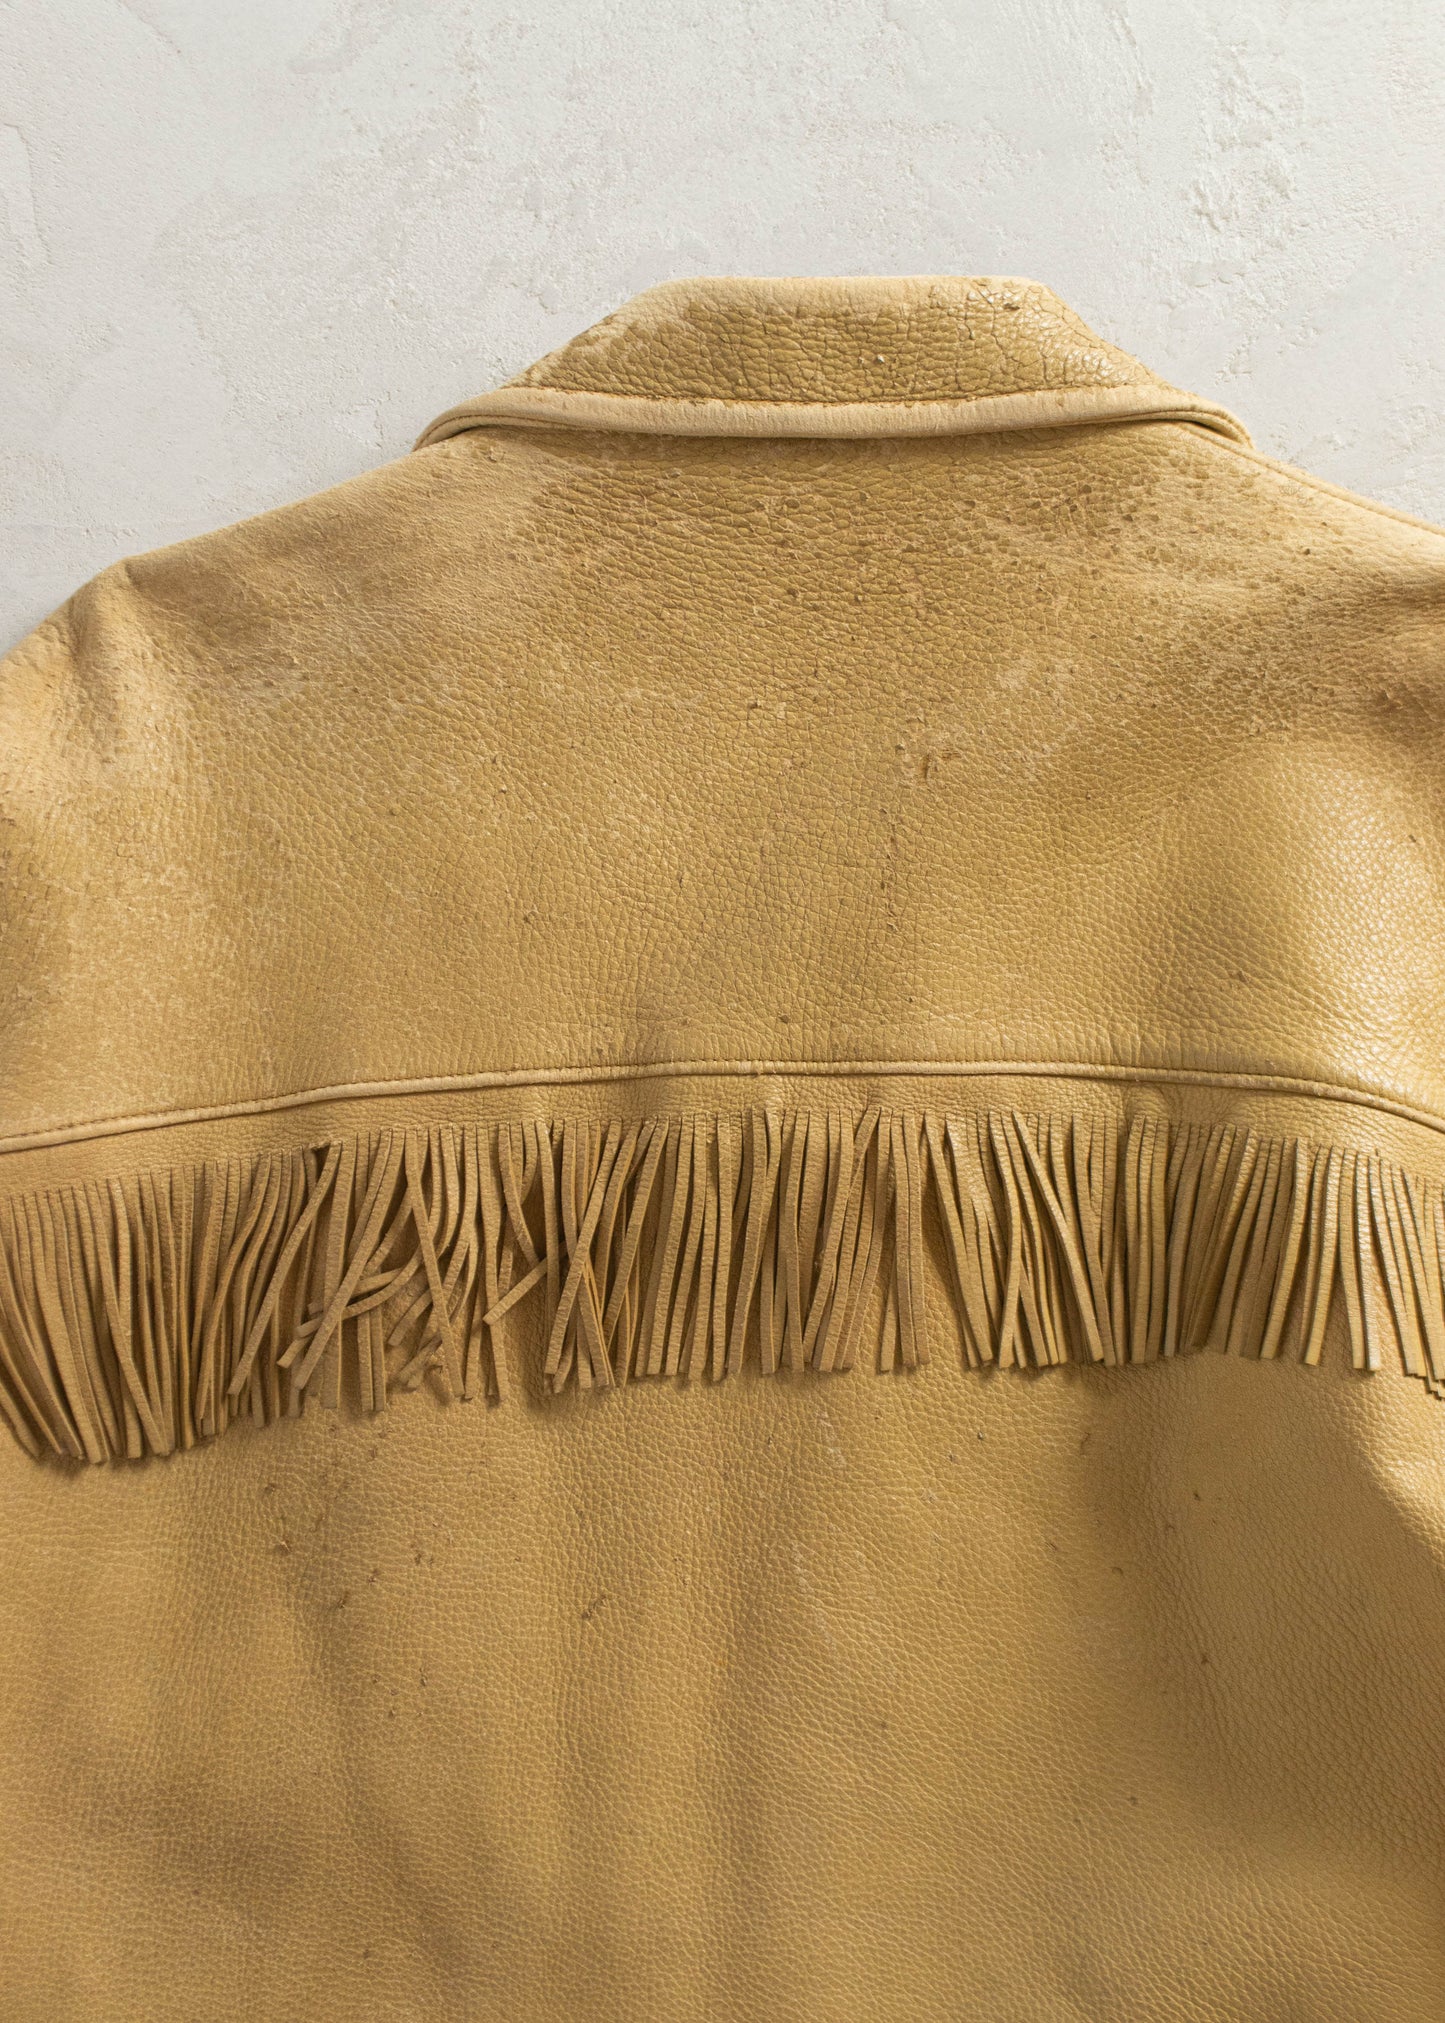 Vintage 1970s Mid-Western Fringe Suede Jacket Size XS/S